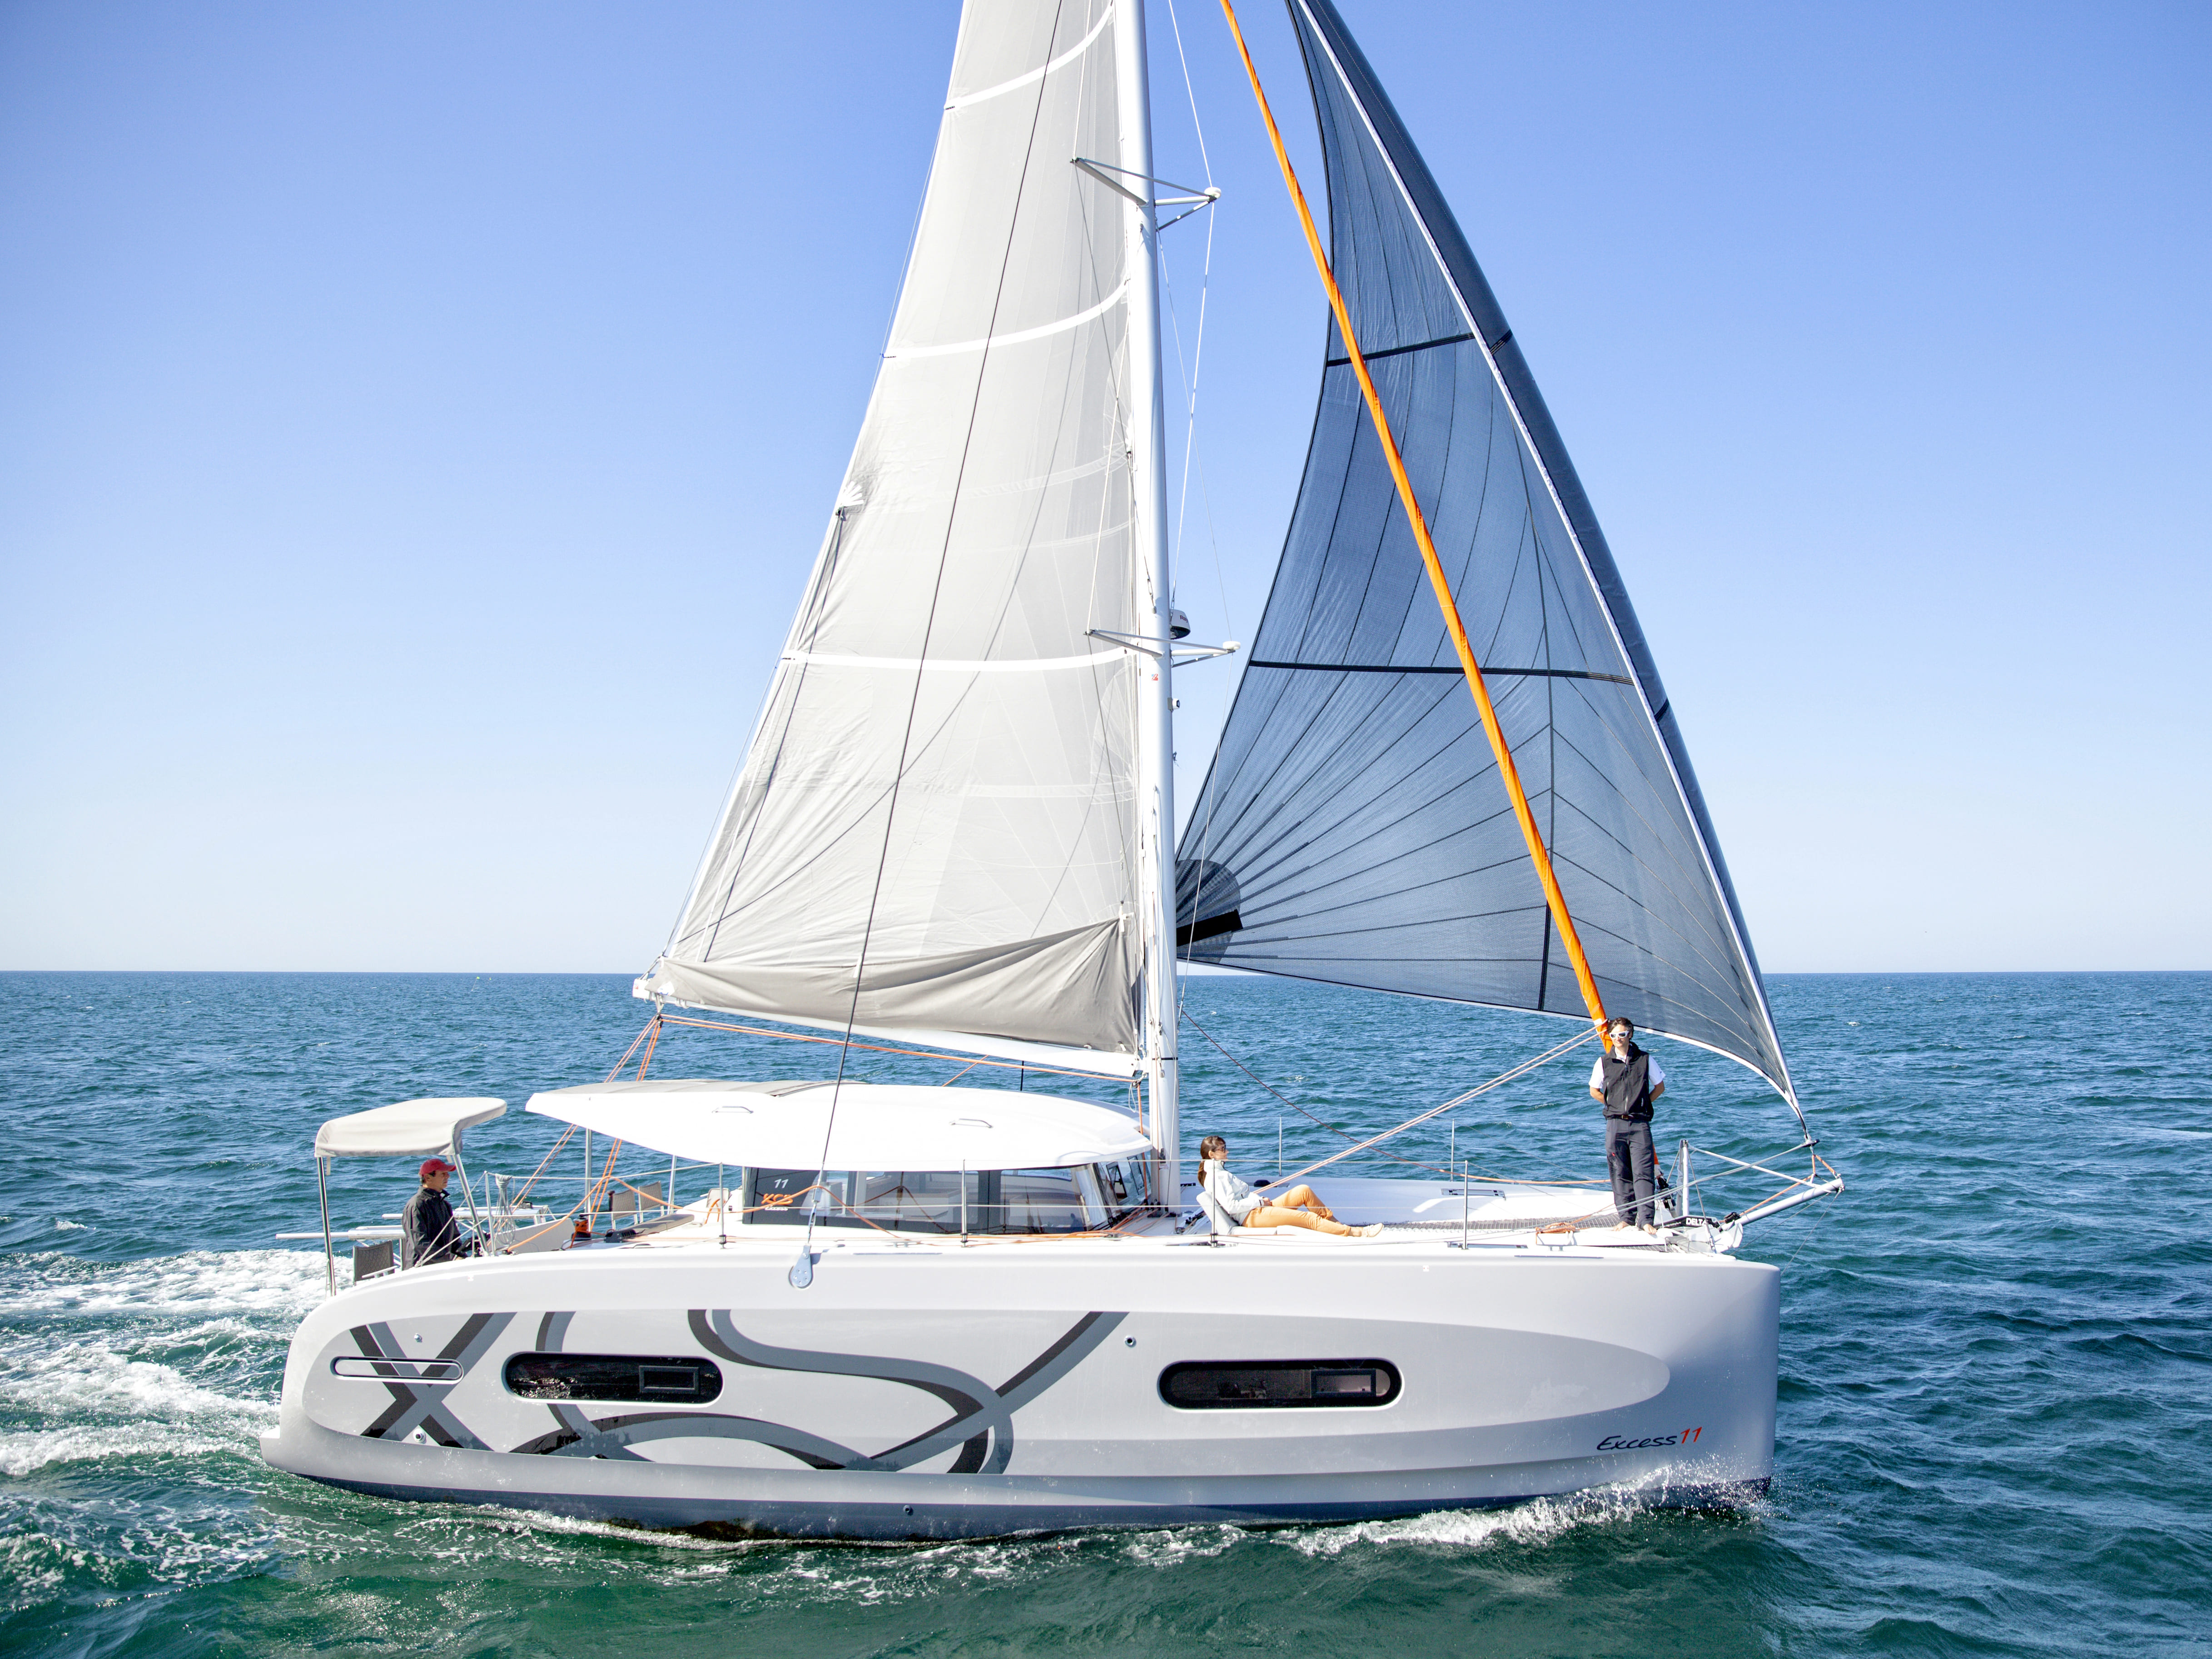 Excess 11 - Yacht Charter Alicante & Boat hire in Spain Costa Blanca Denia Marina El Portet 1